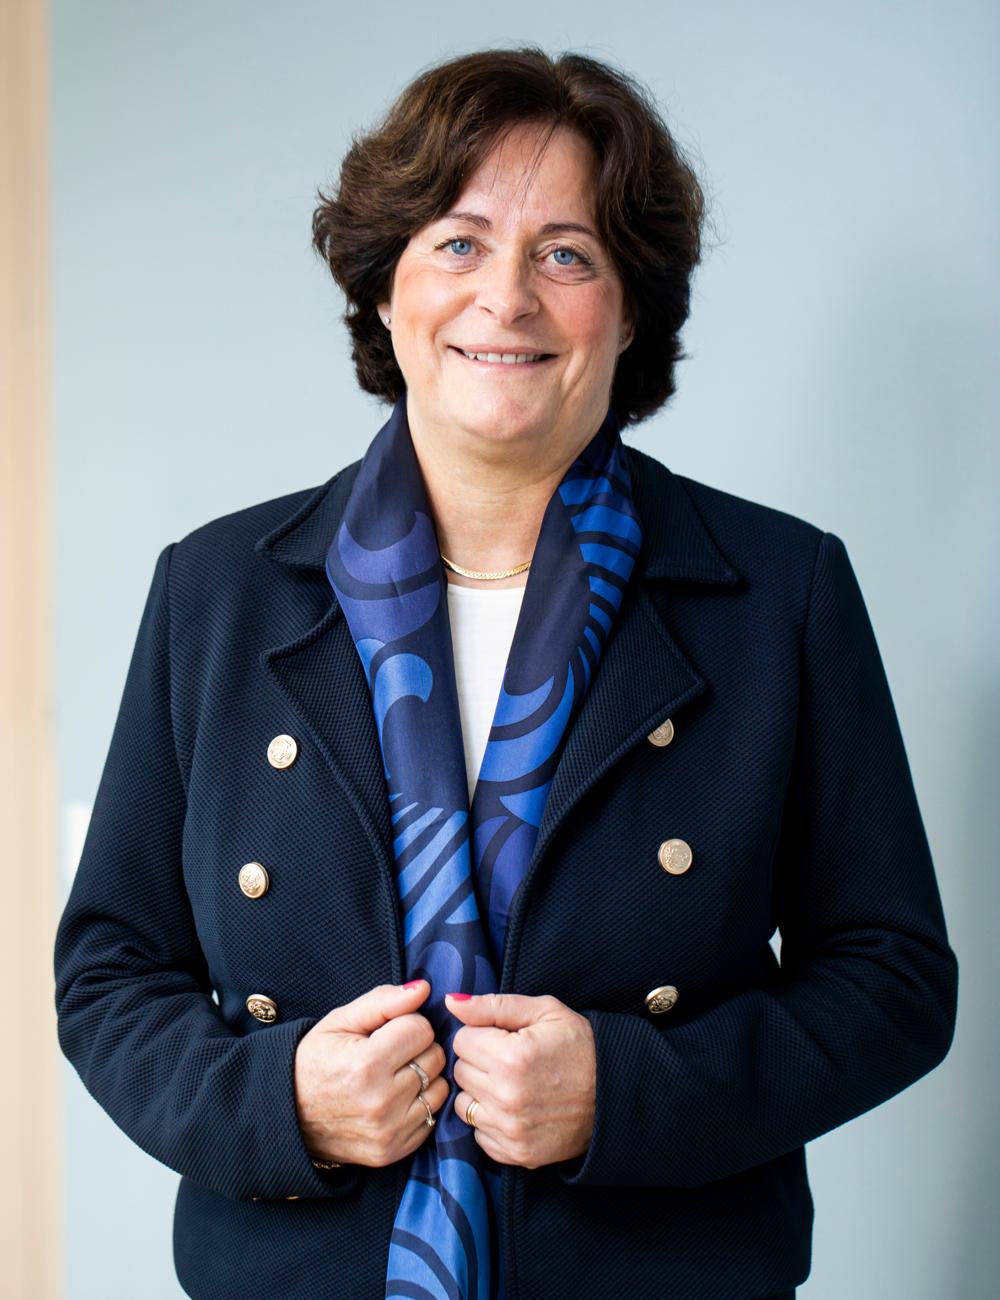 Gunilla Osswald, CEO of Bioarctic.